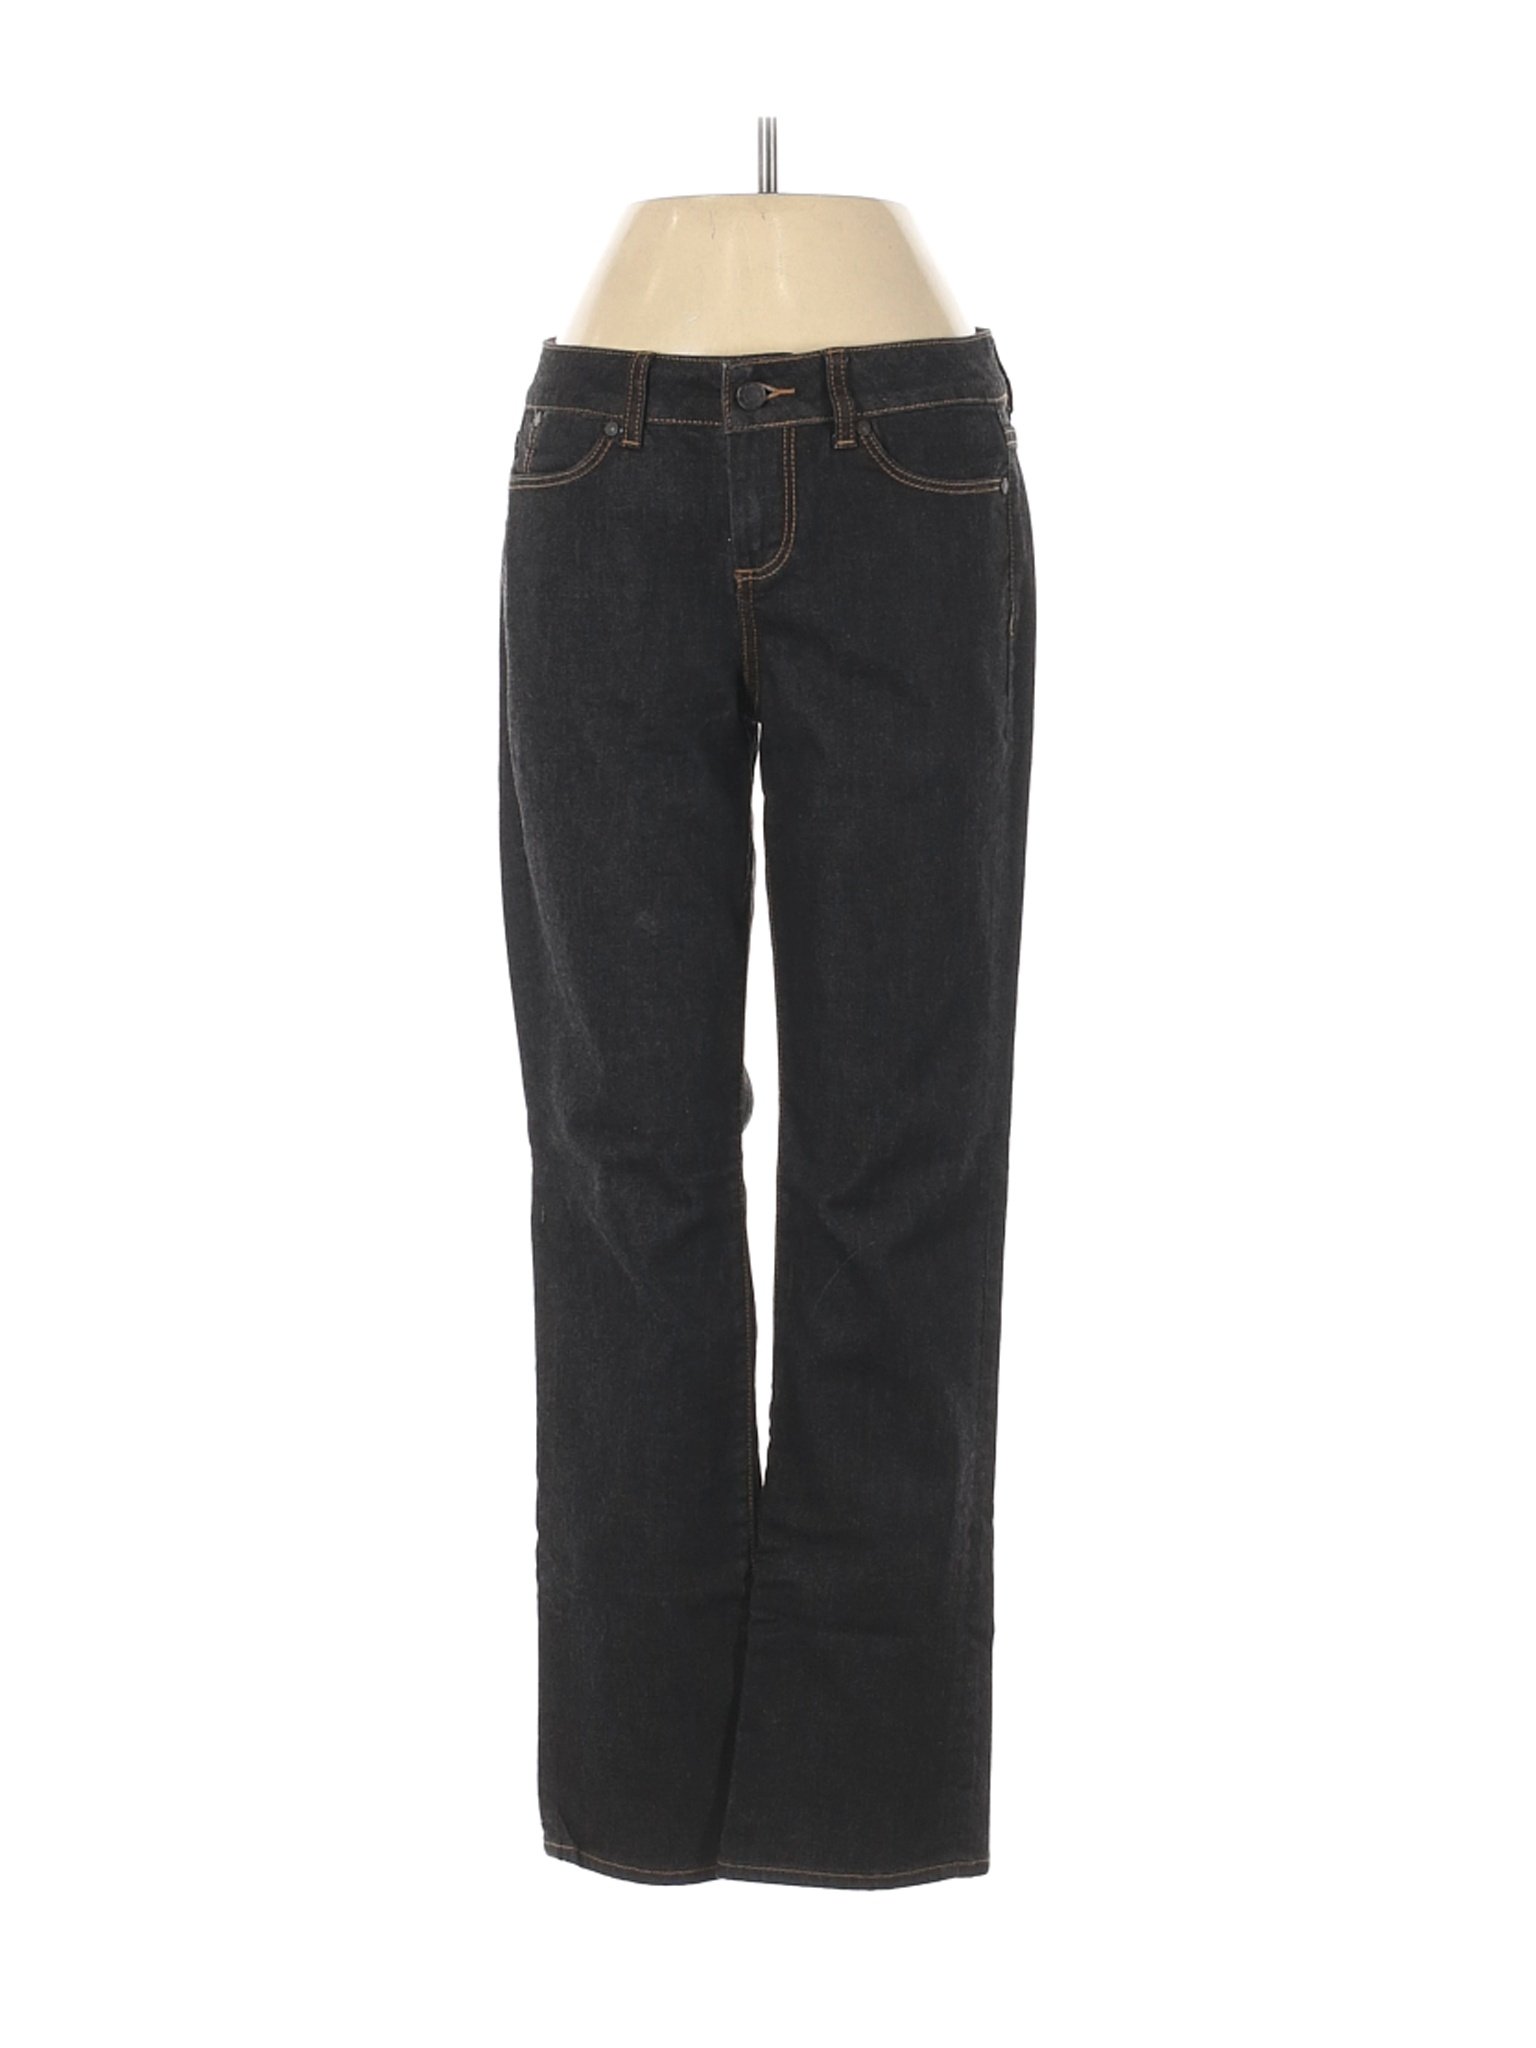 Talbots Women Black Jeans 4 Petites | eBay